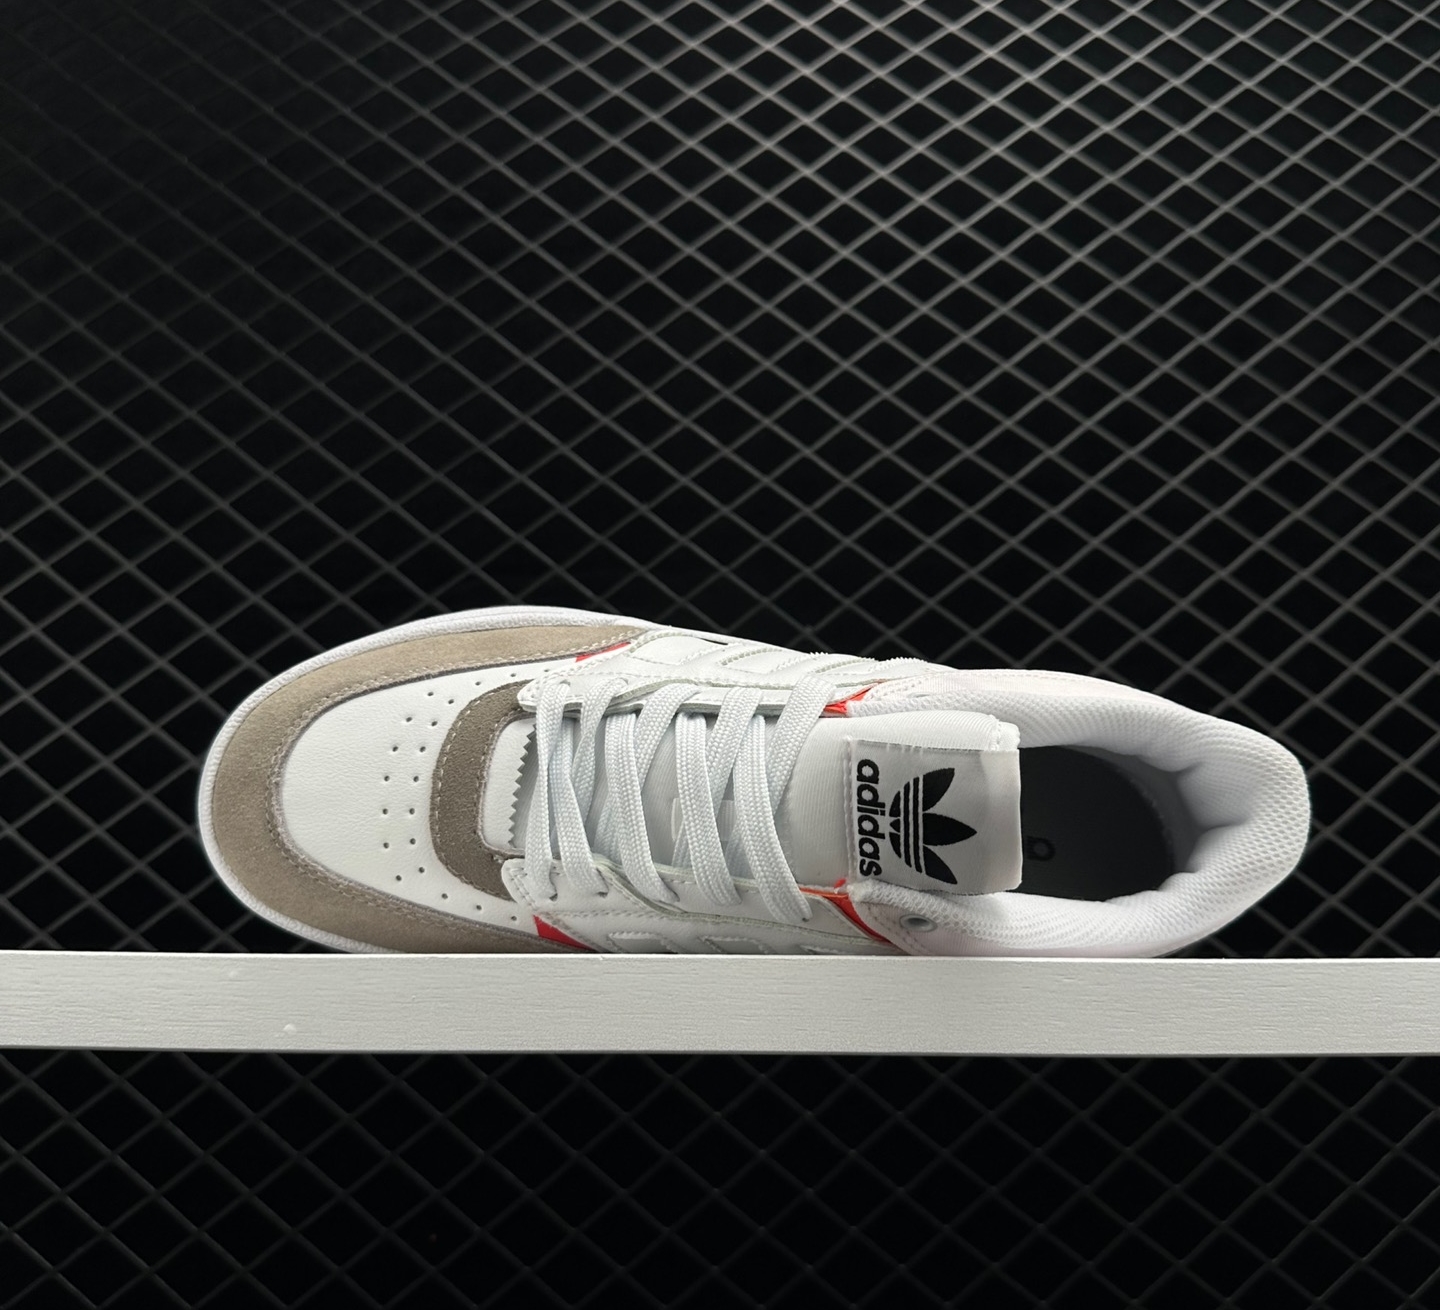 Adidas Originals Drop Step XL Low Sneakers - Off White/Navy/Black